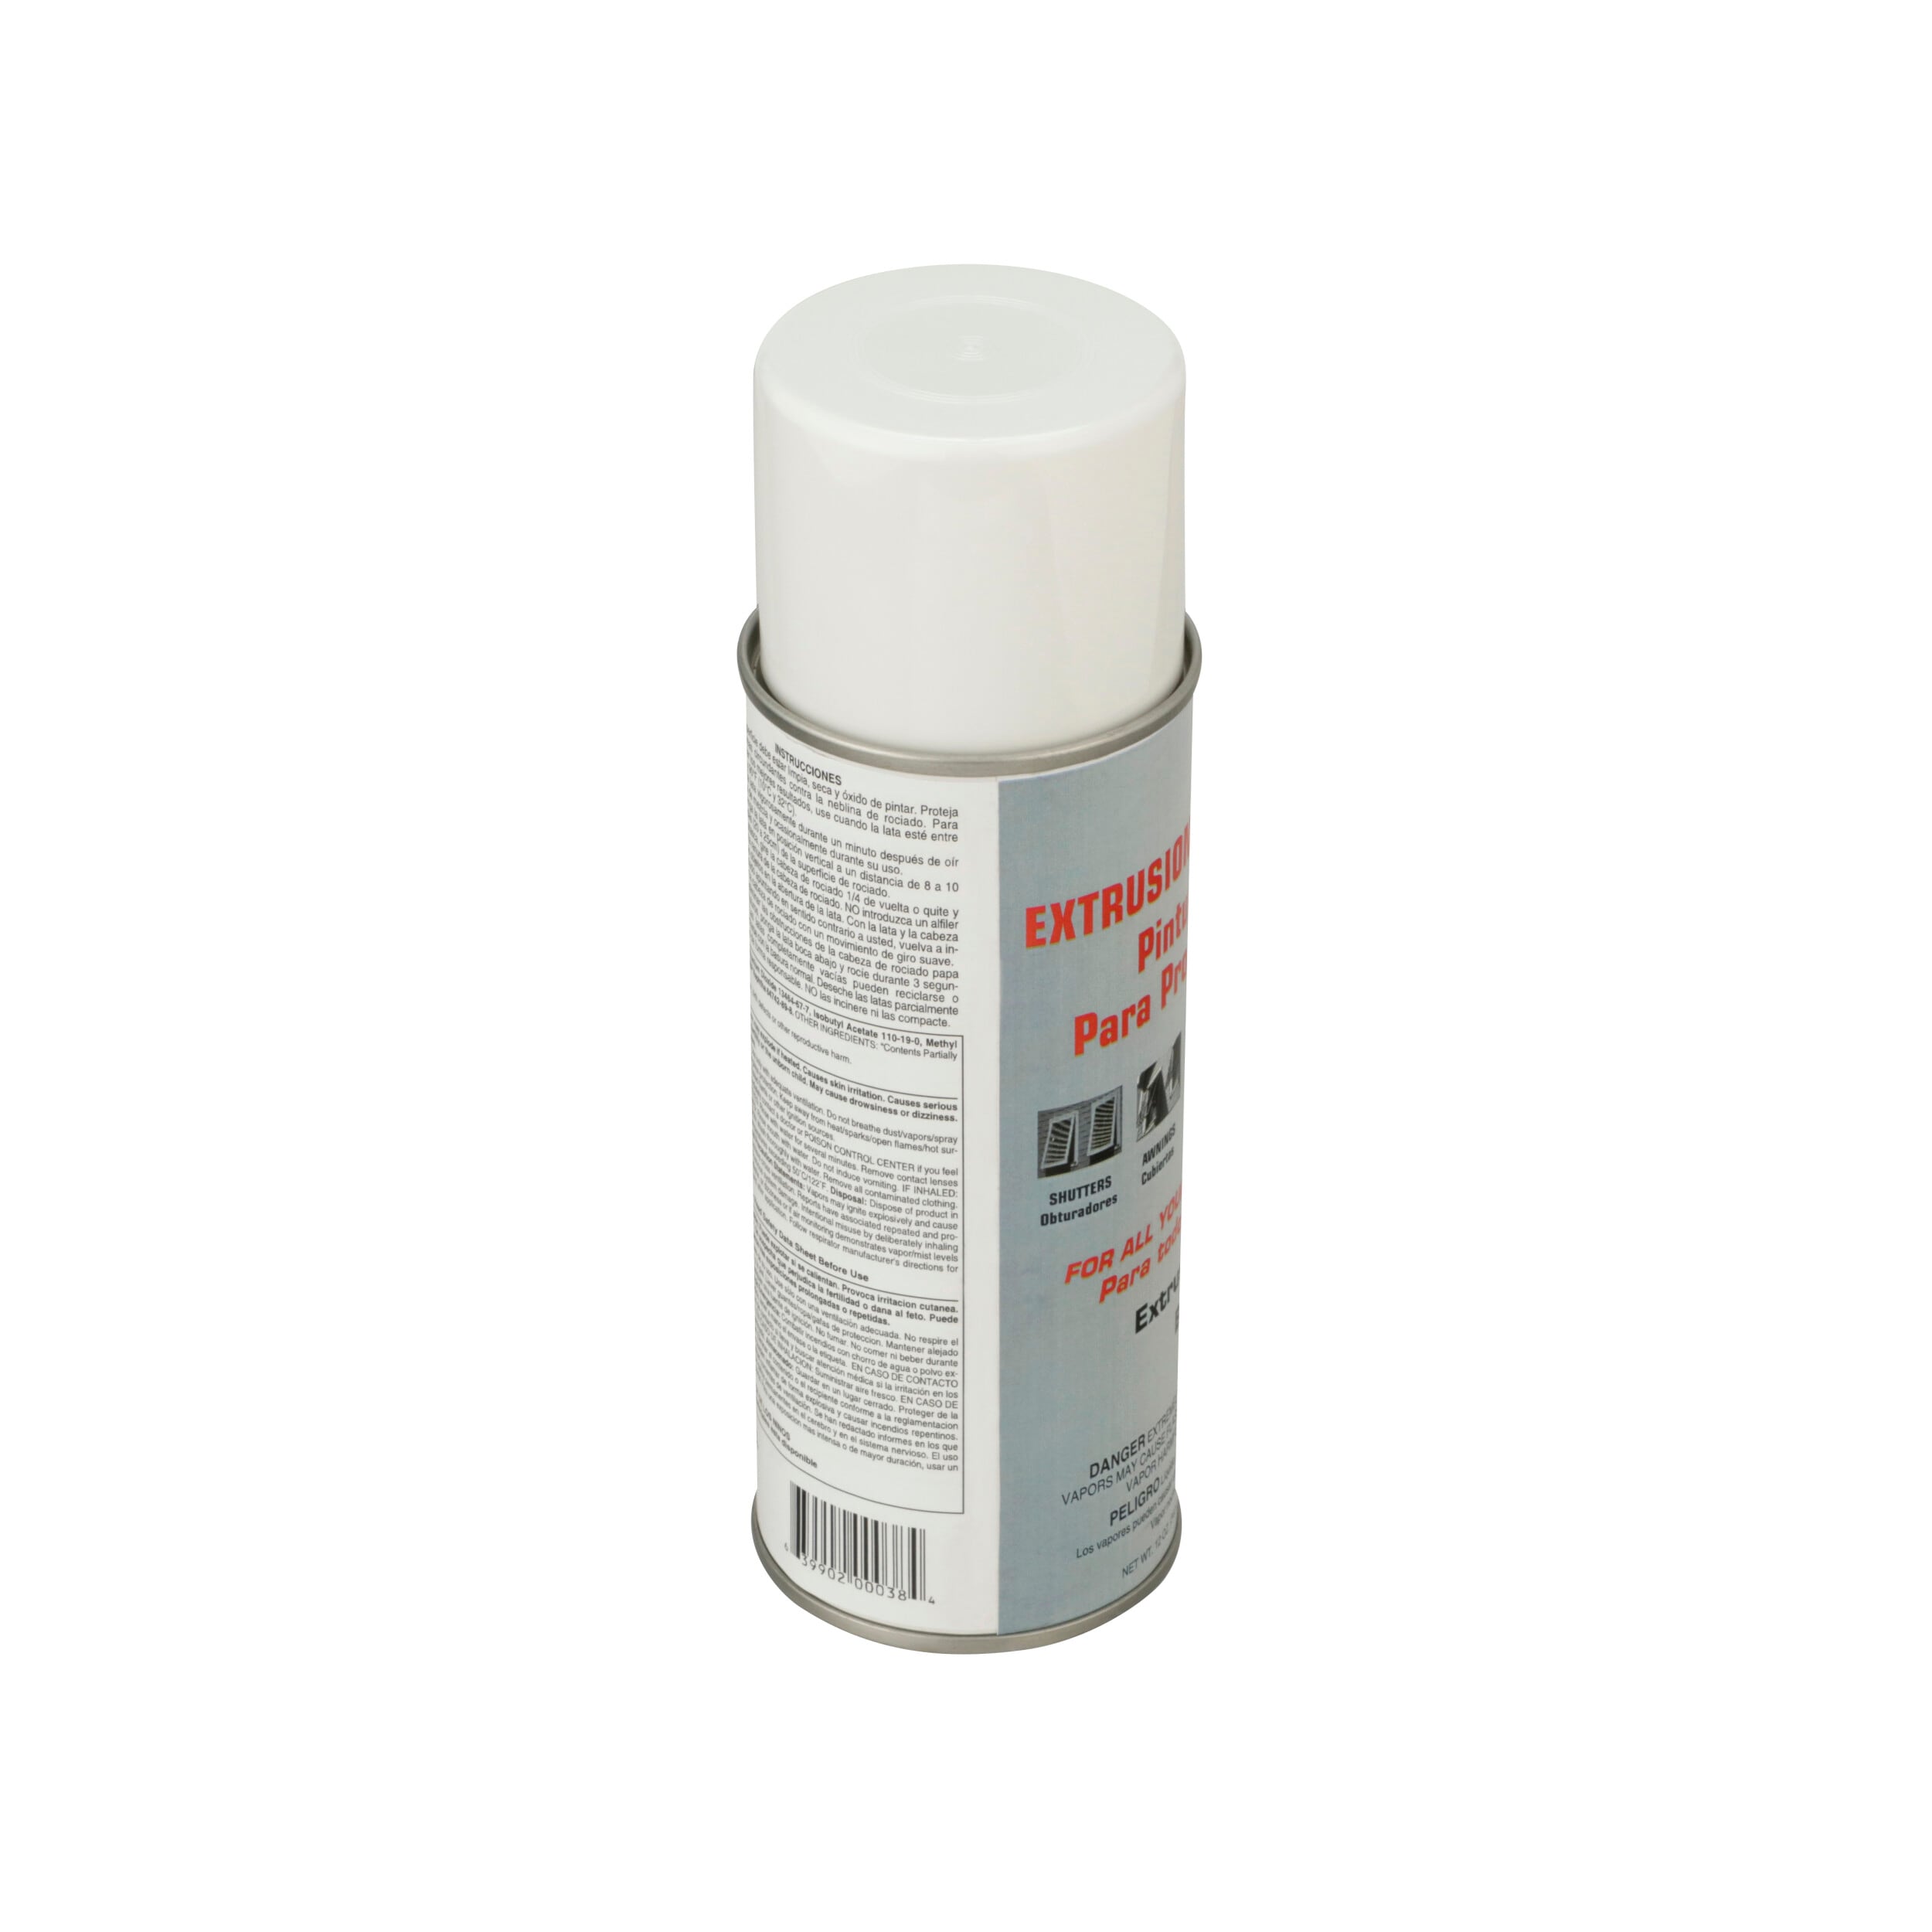 12 Wholesale Glominex Glow Spray Paint 4 Oz - White - at 